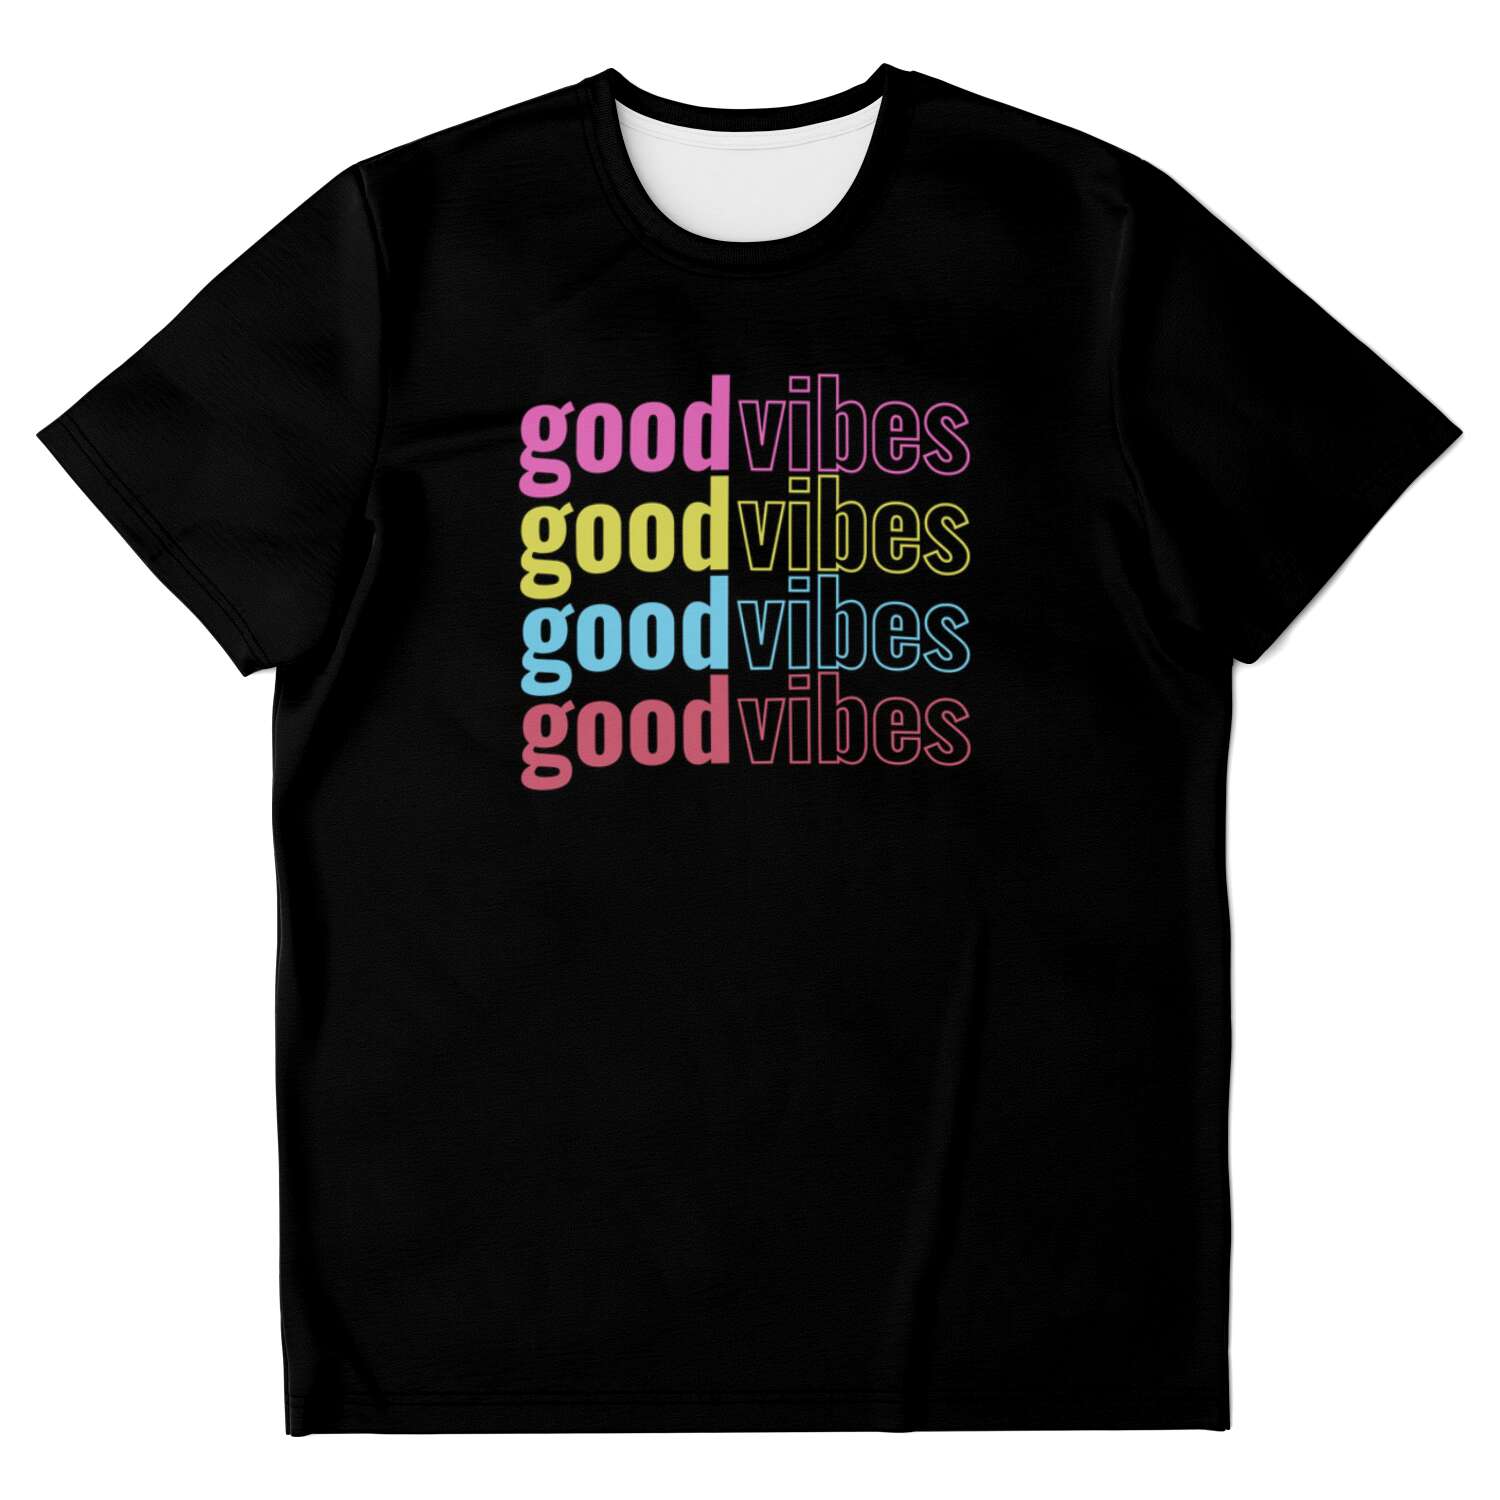 Good vibes T-shirt